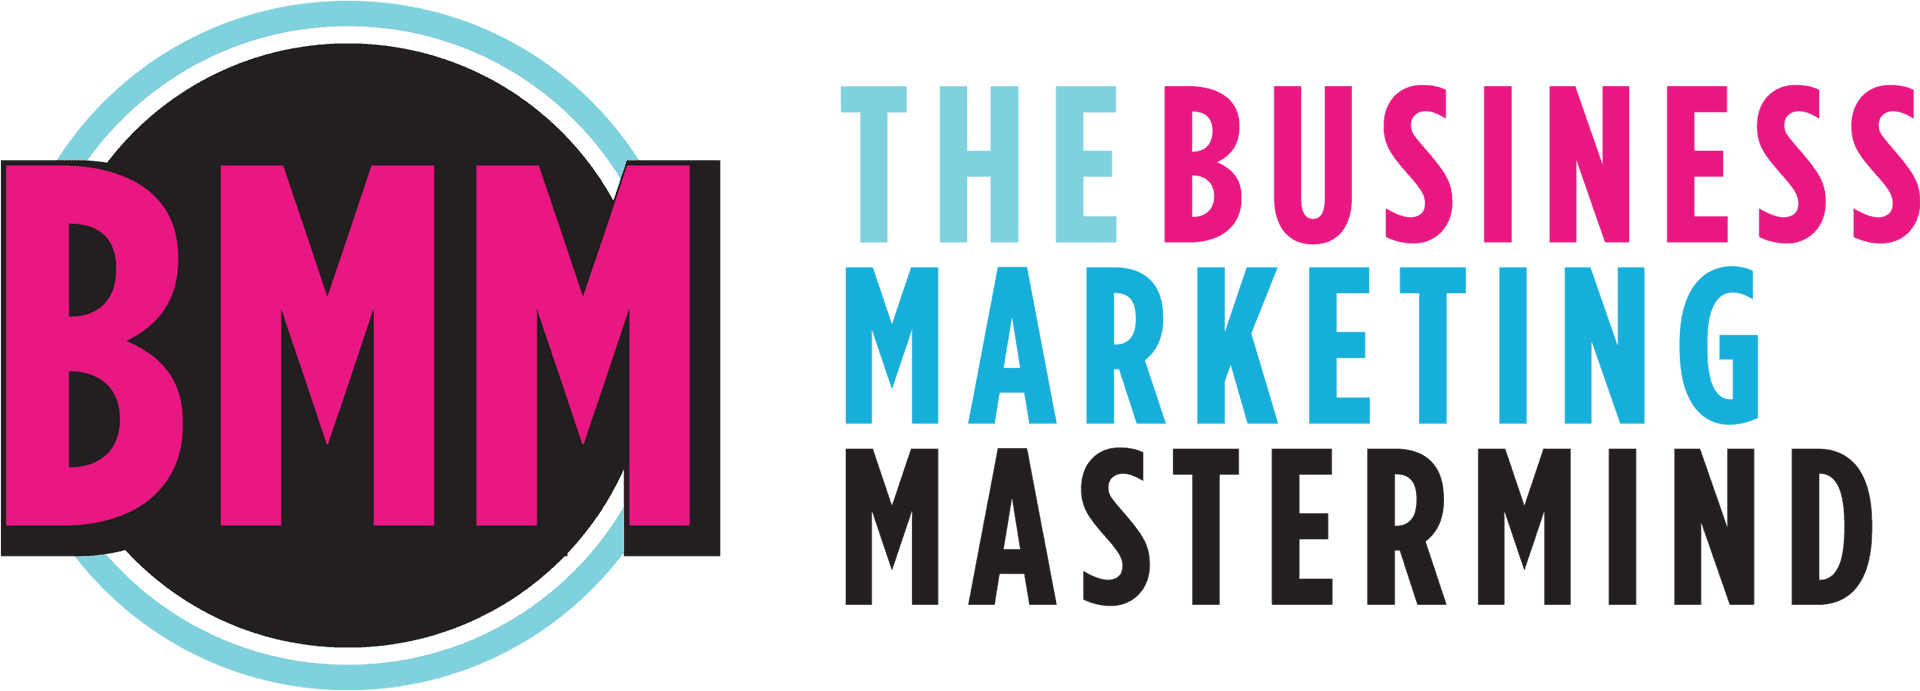 Business Marketing Mastermind Logo PNG